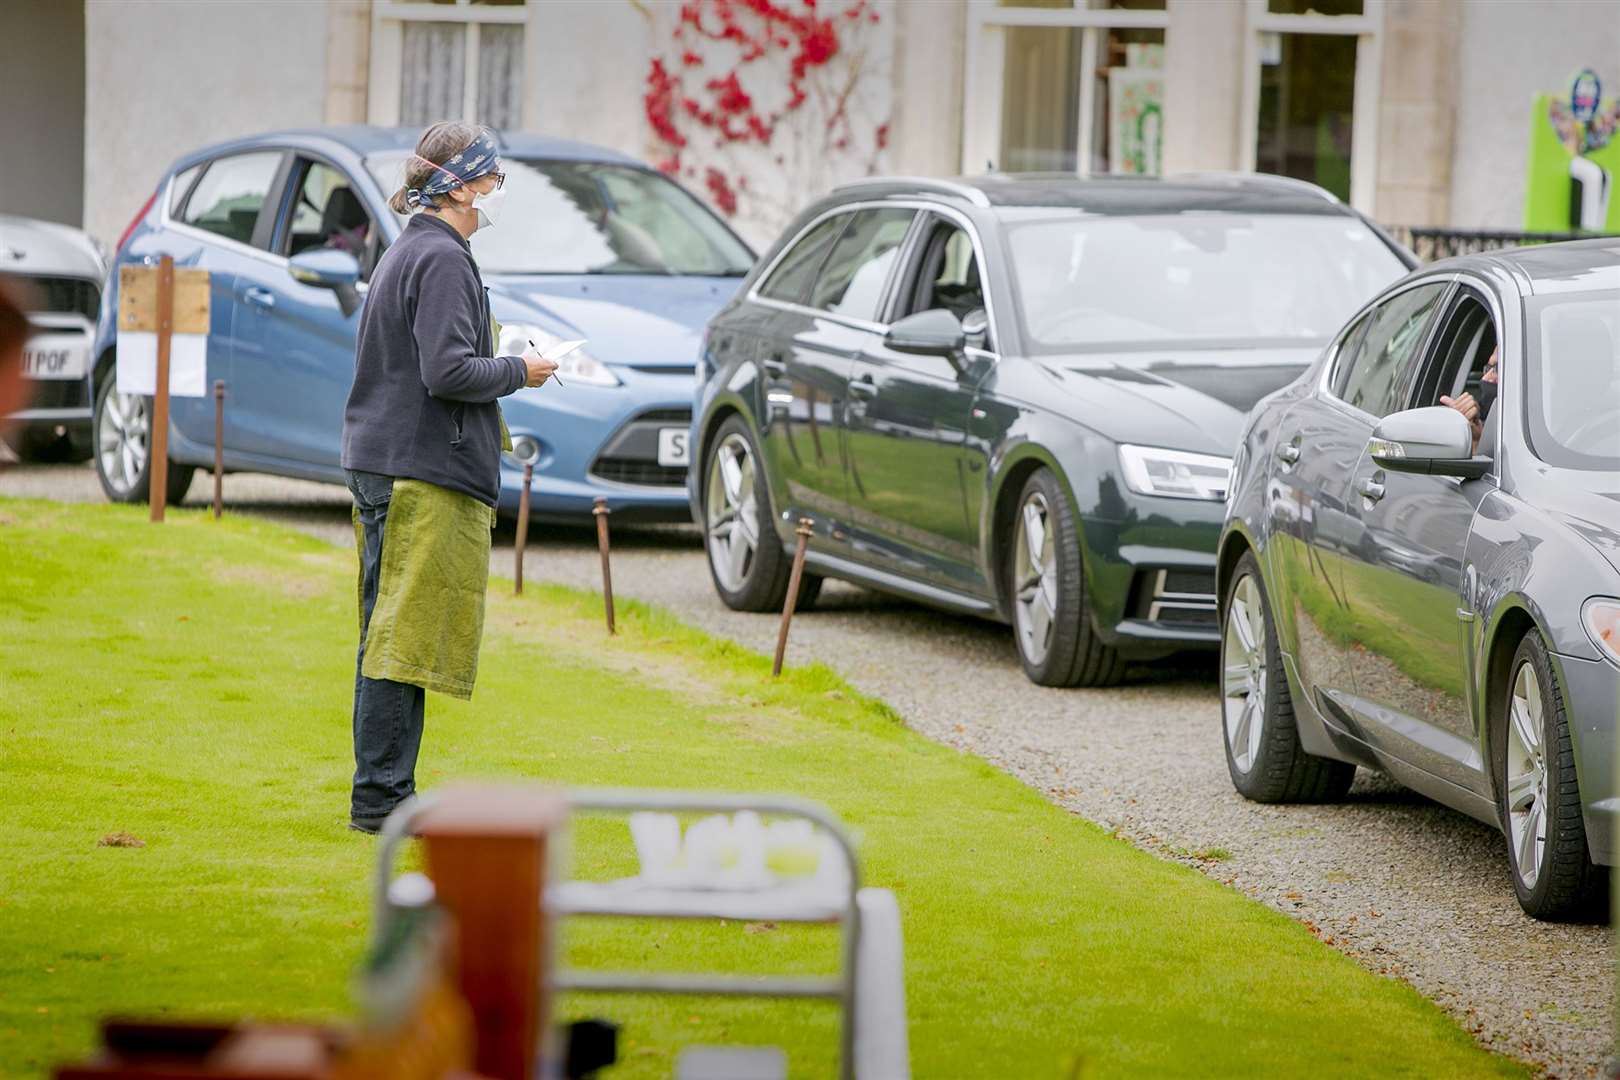 Marion Kolata takes orders from cars at the Pitmedden Garden drive-thru harvest event. Picture: Rory Raitt